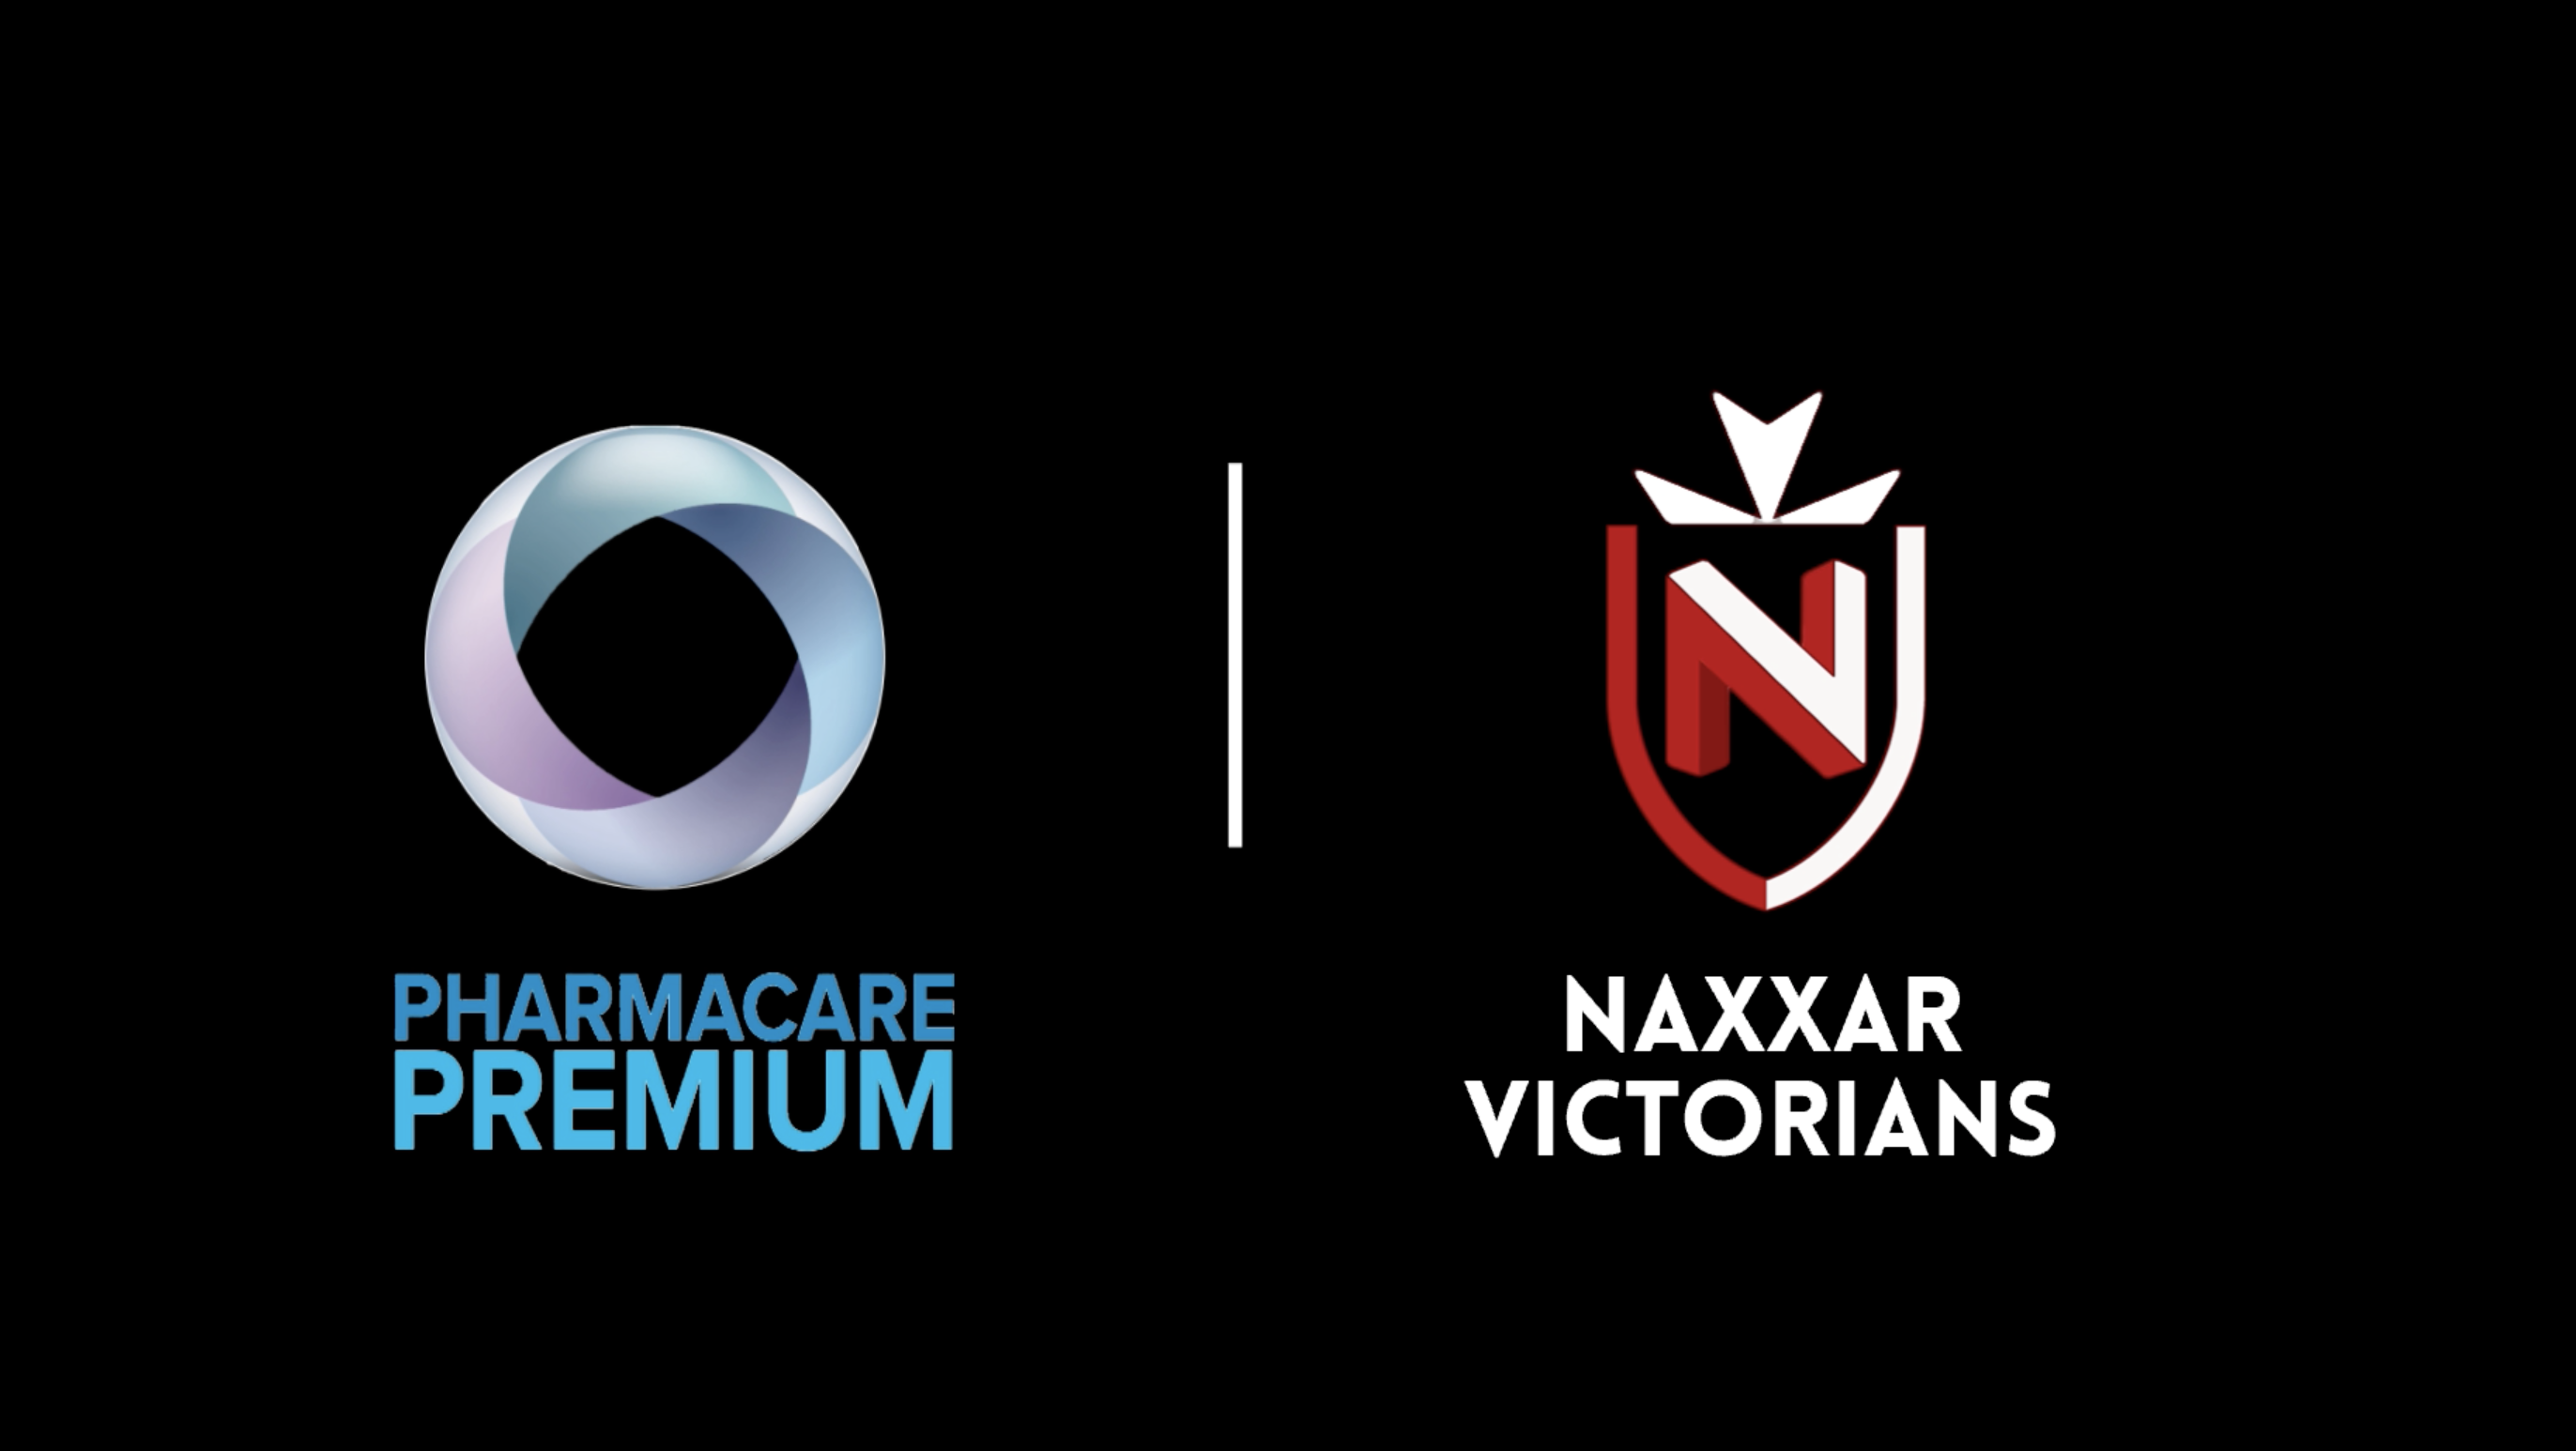 Pharmacare and Naxxar Victorians logos